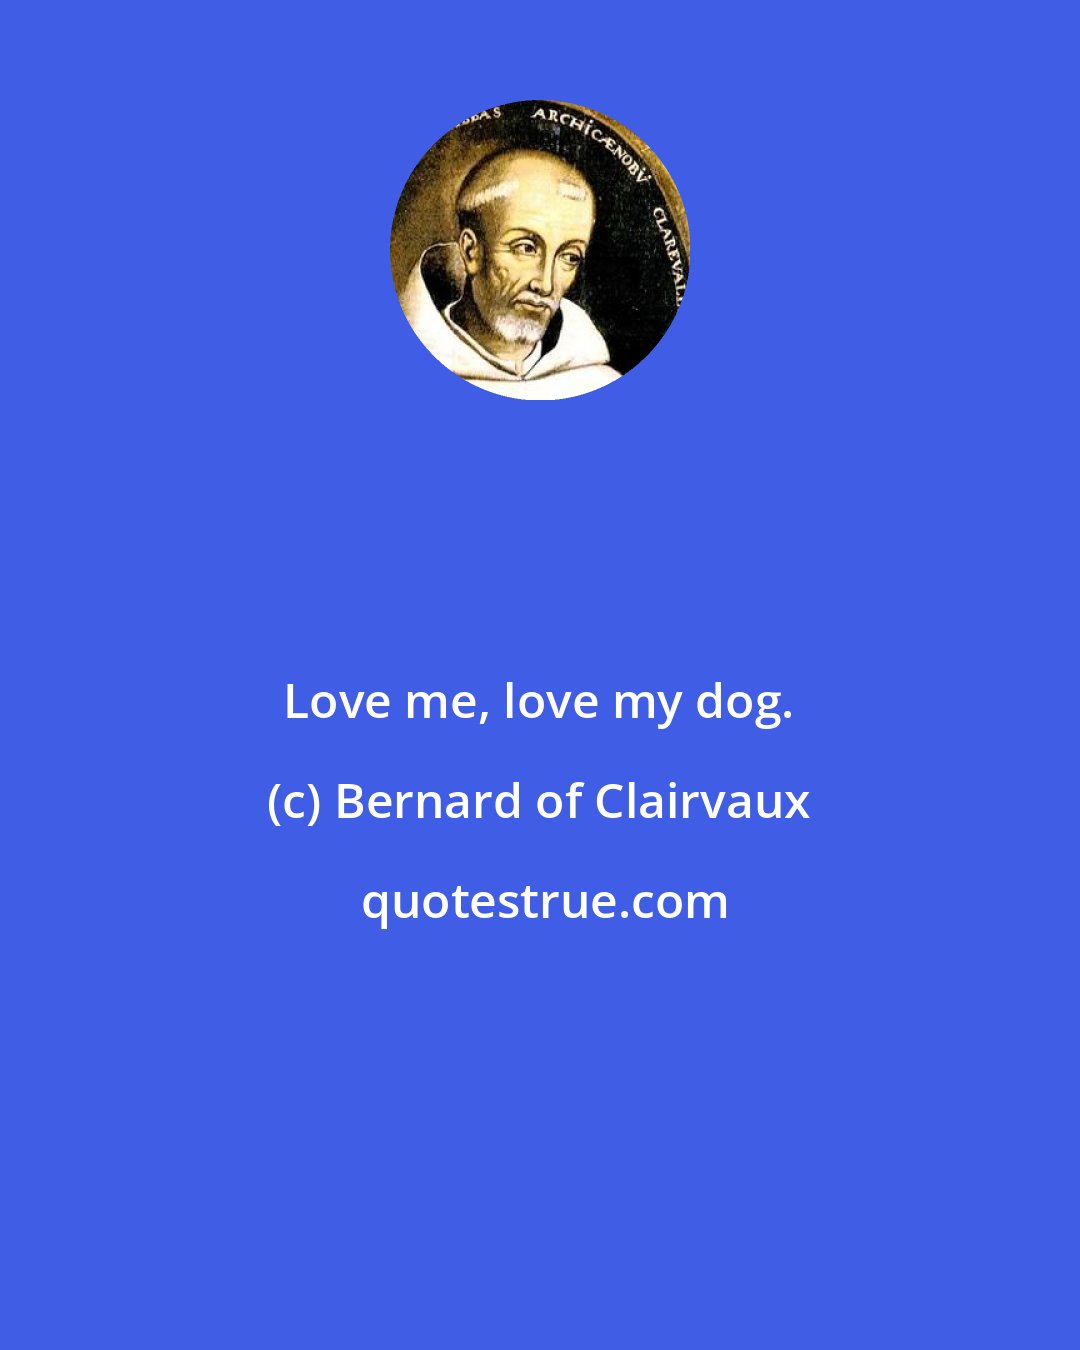 Bernard of Clairvaux: Love me, love my dog.